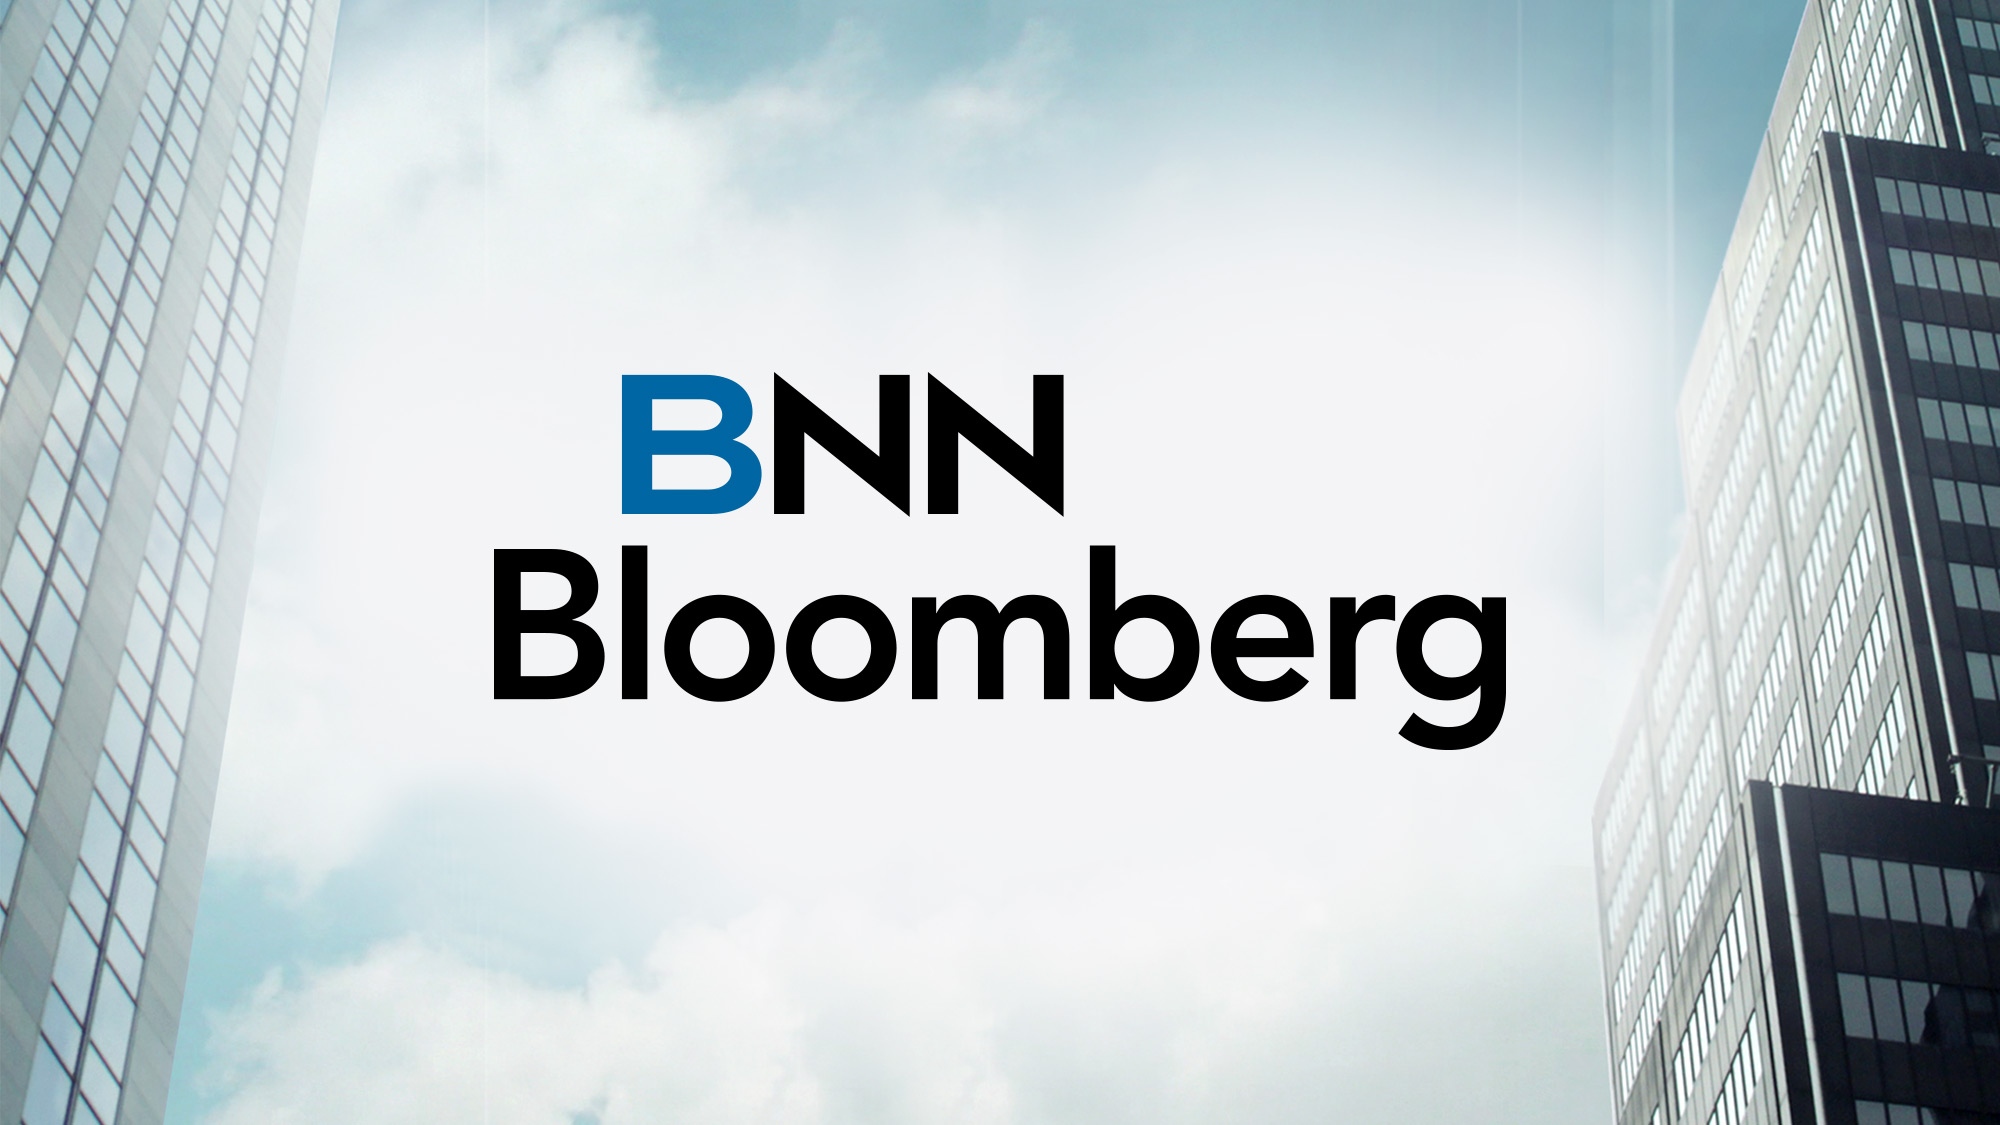 BNN Bloomberg Flash Briefing: